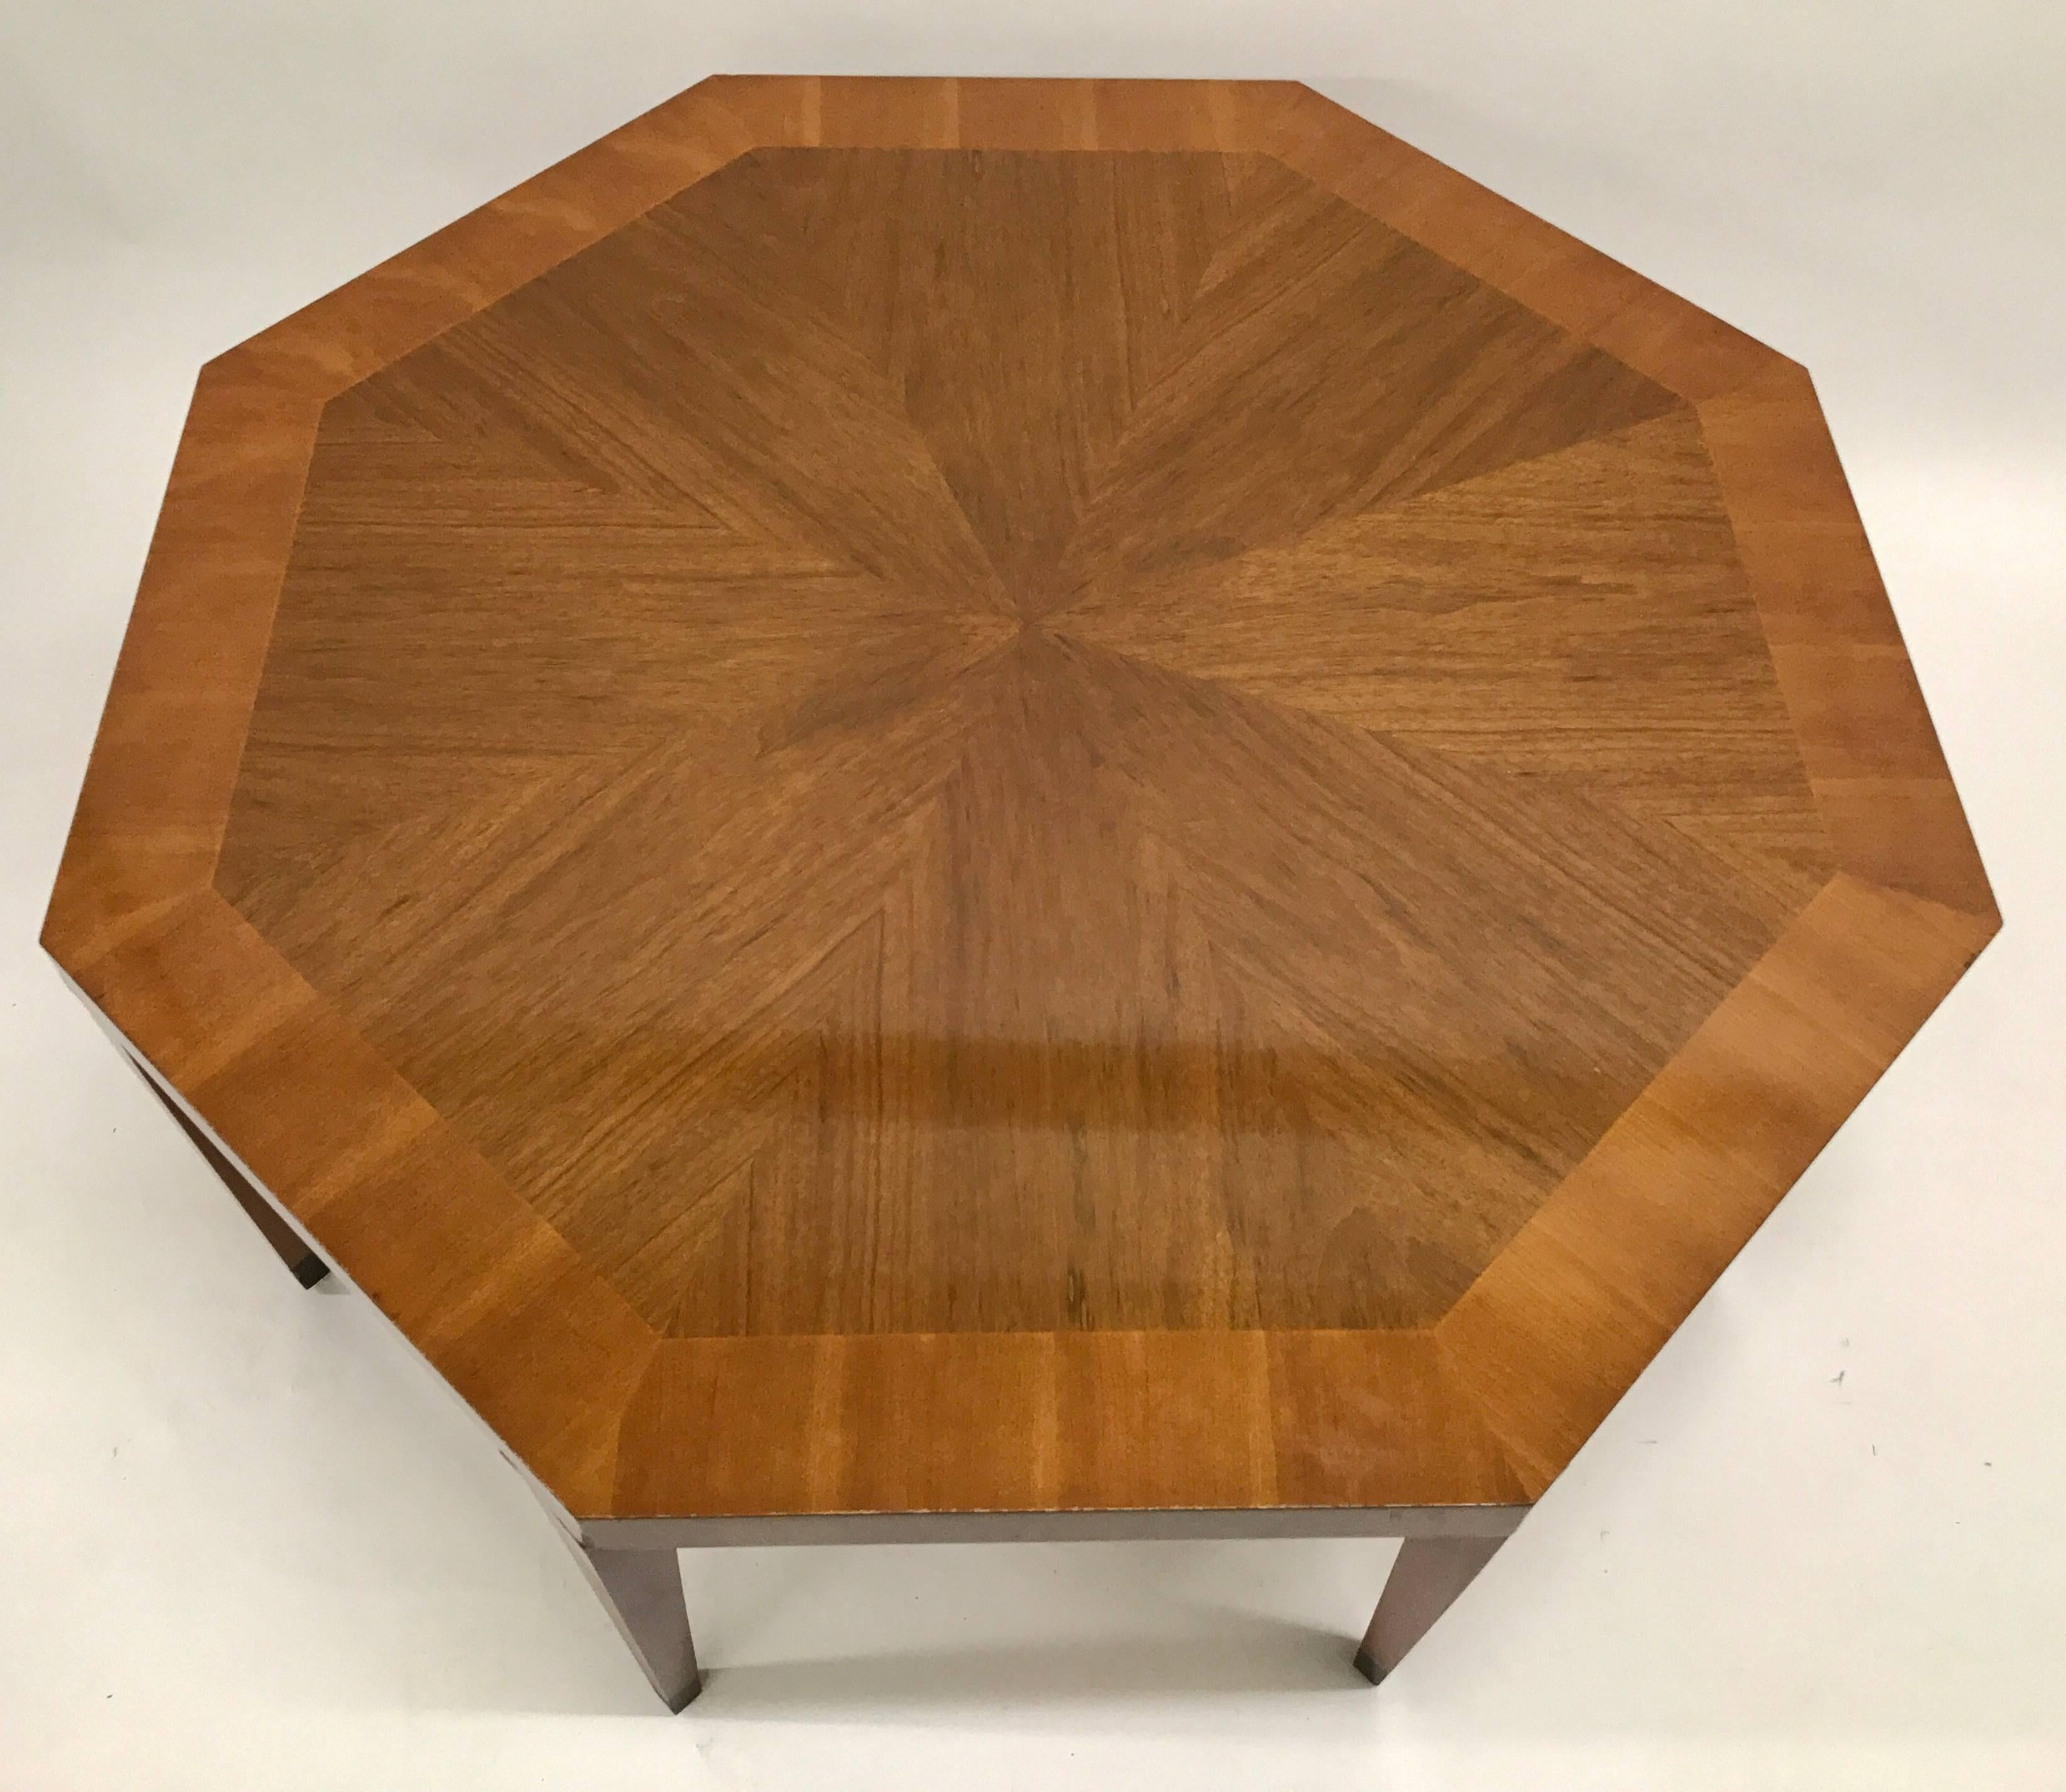 Baker octagonal coffee table, USA, 1970s.